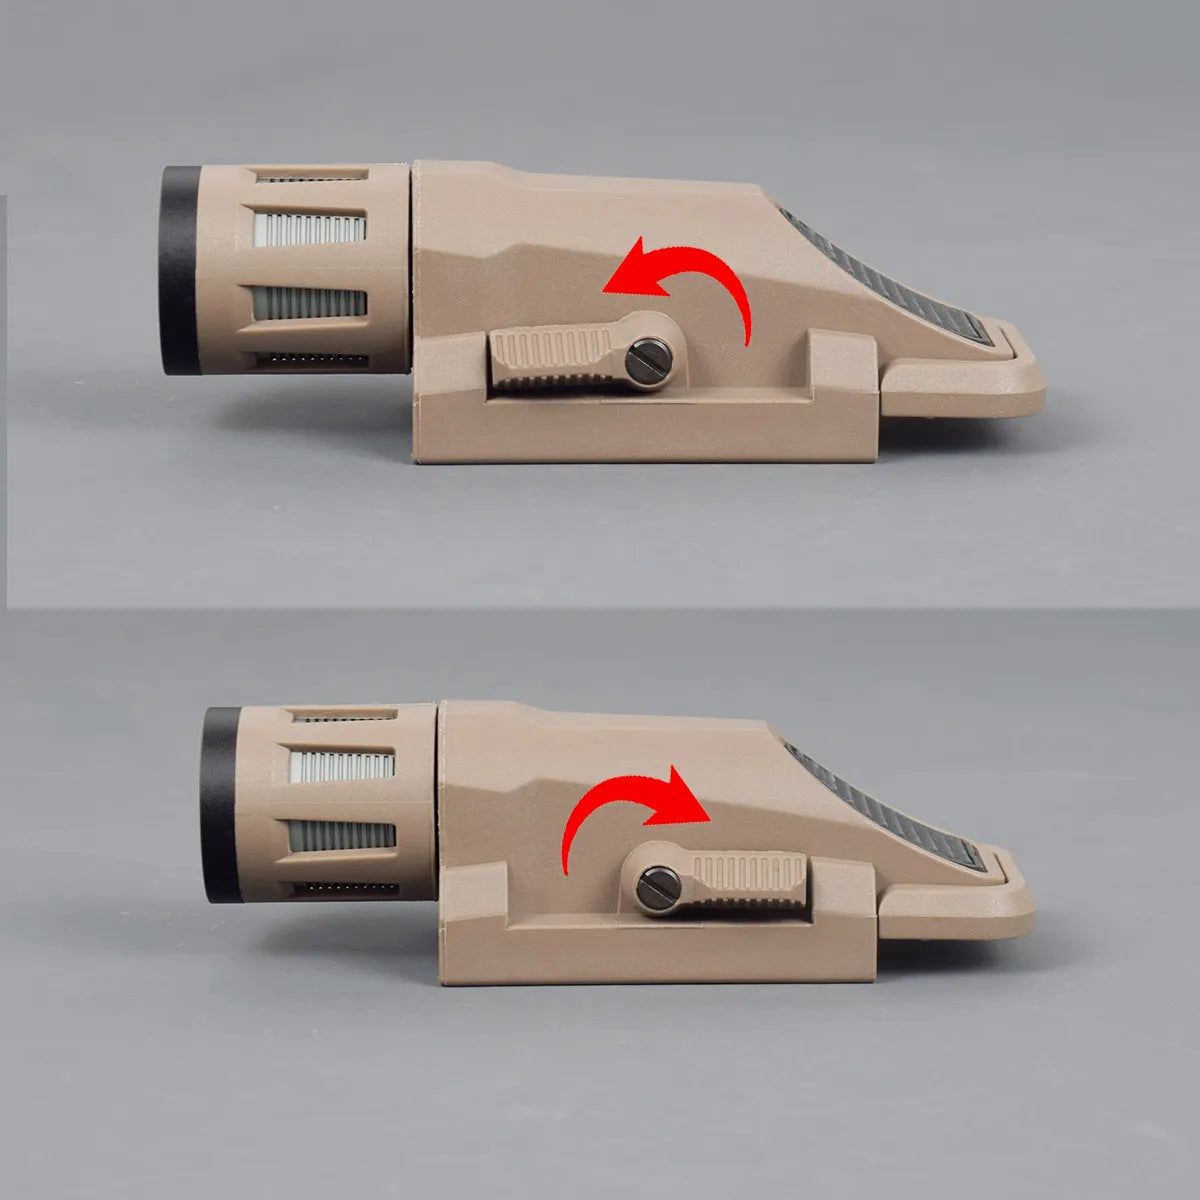 Tactical APL Weapon Gun Light for Pistol Rifle Fit